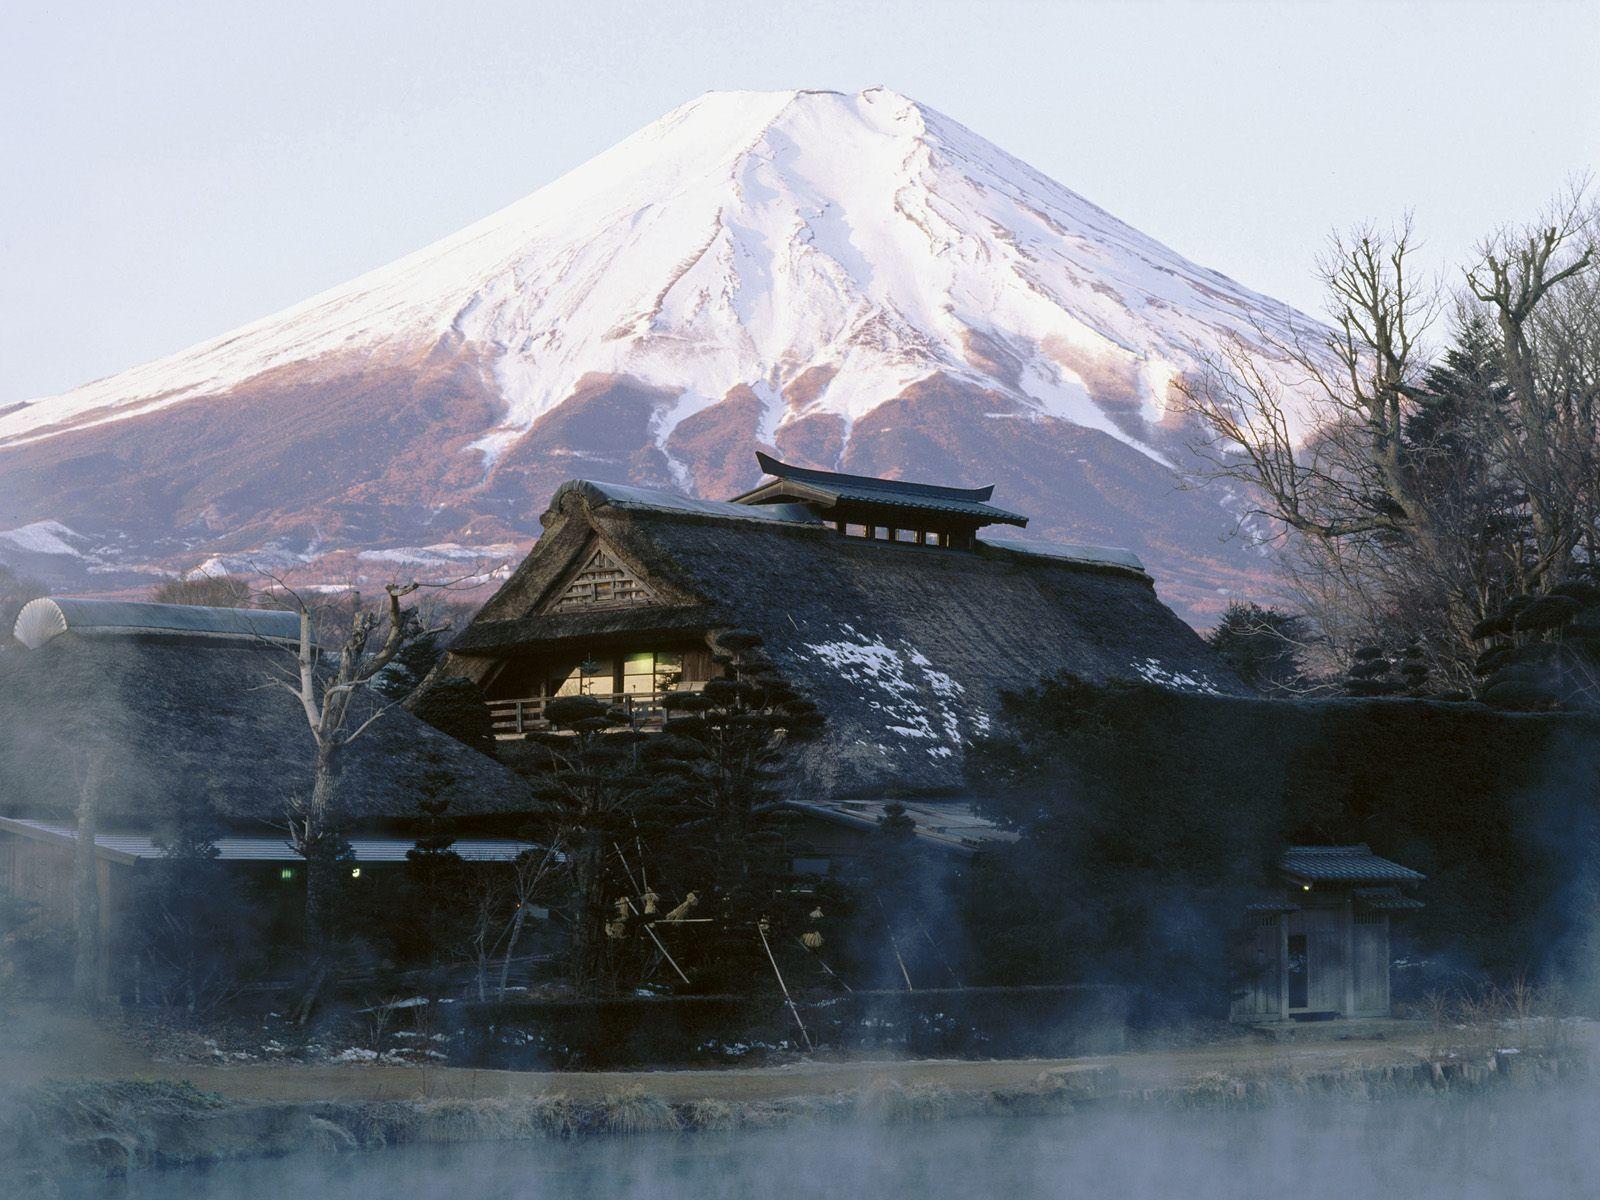 The best Mount Fuji wallpaper ever??